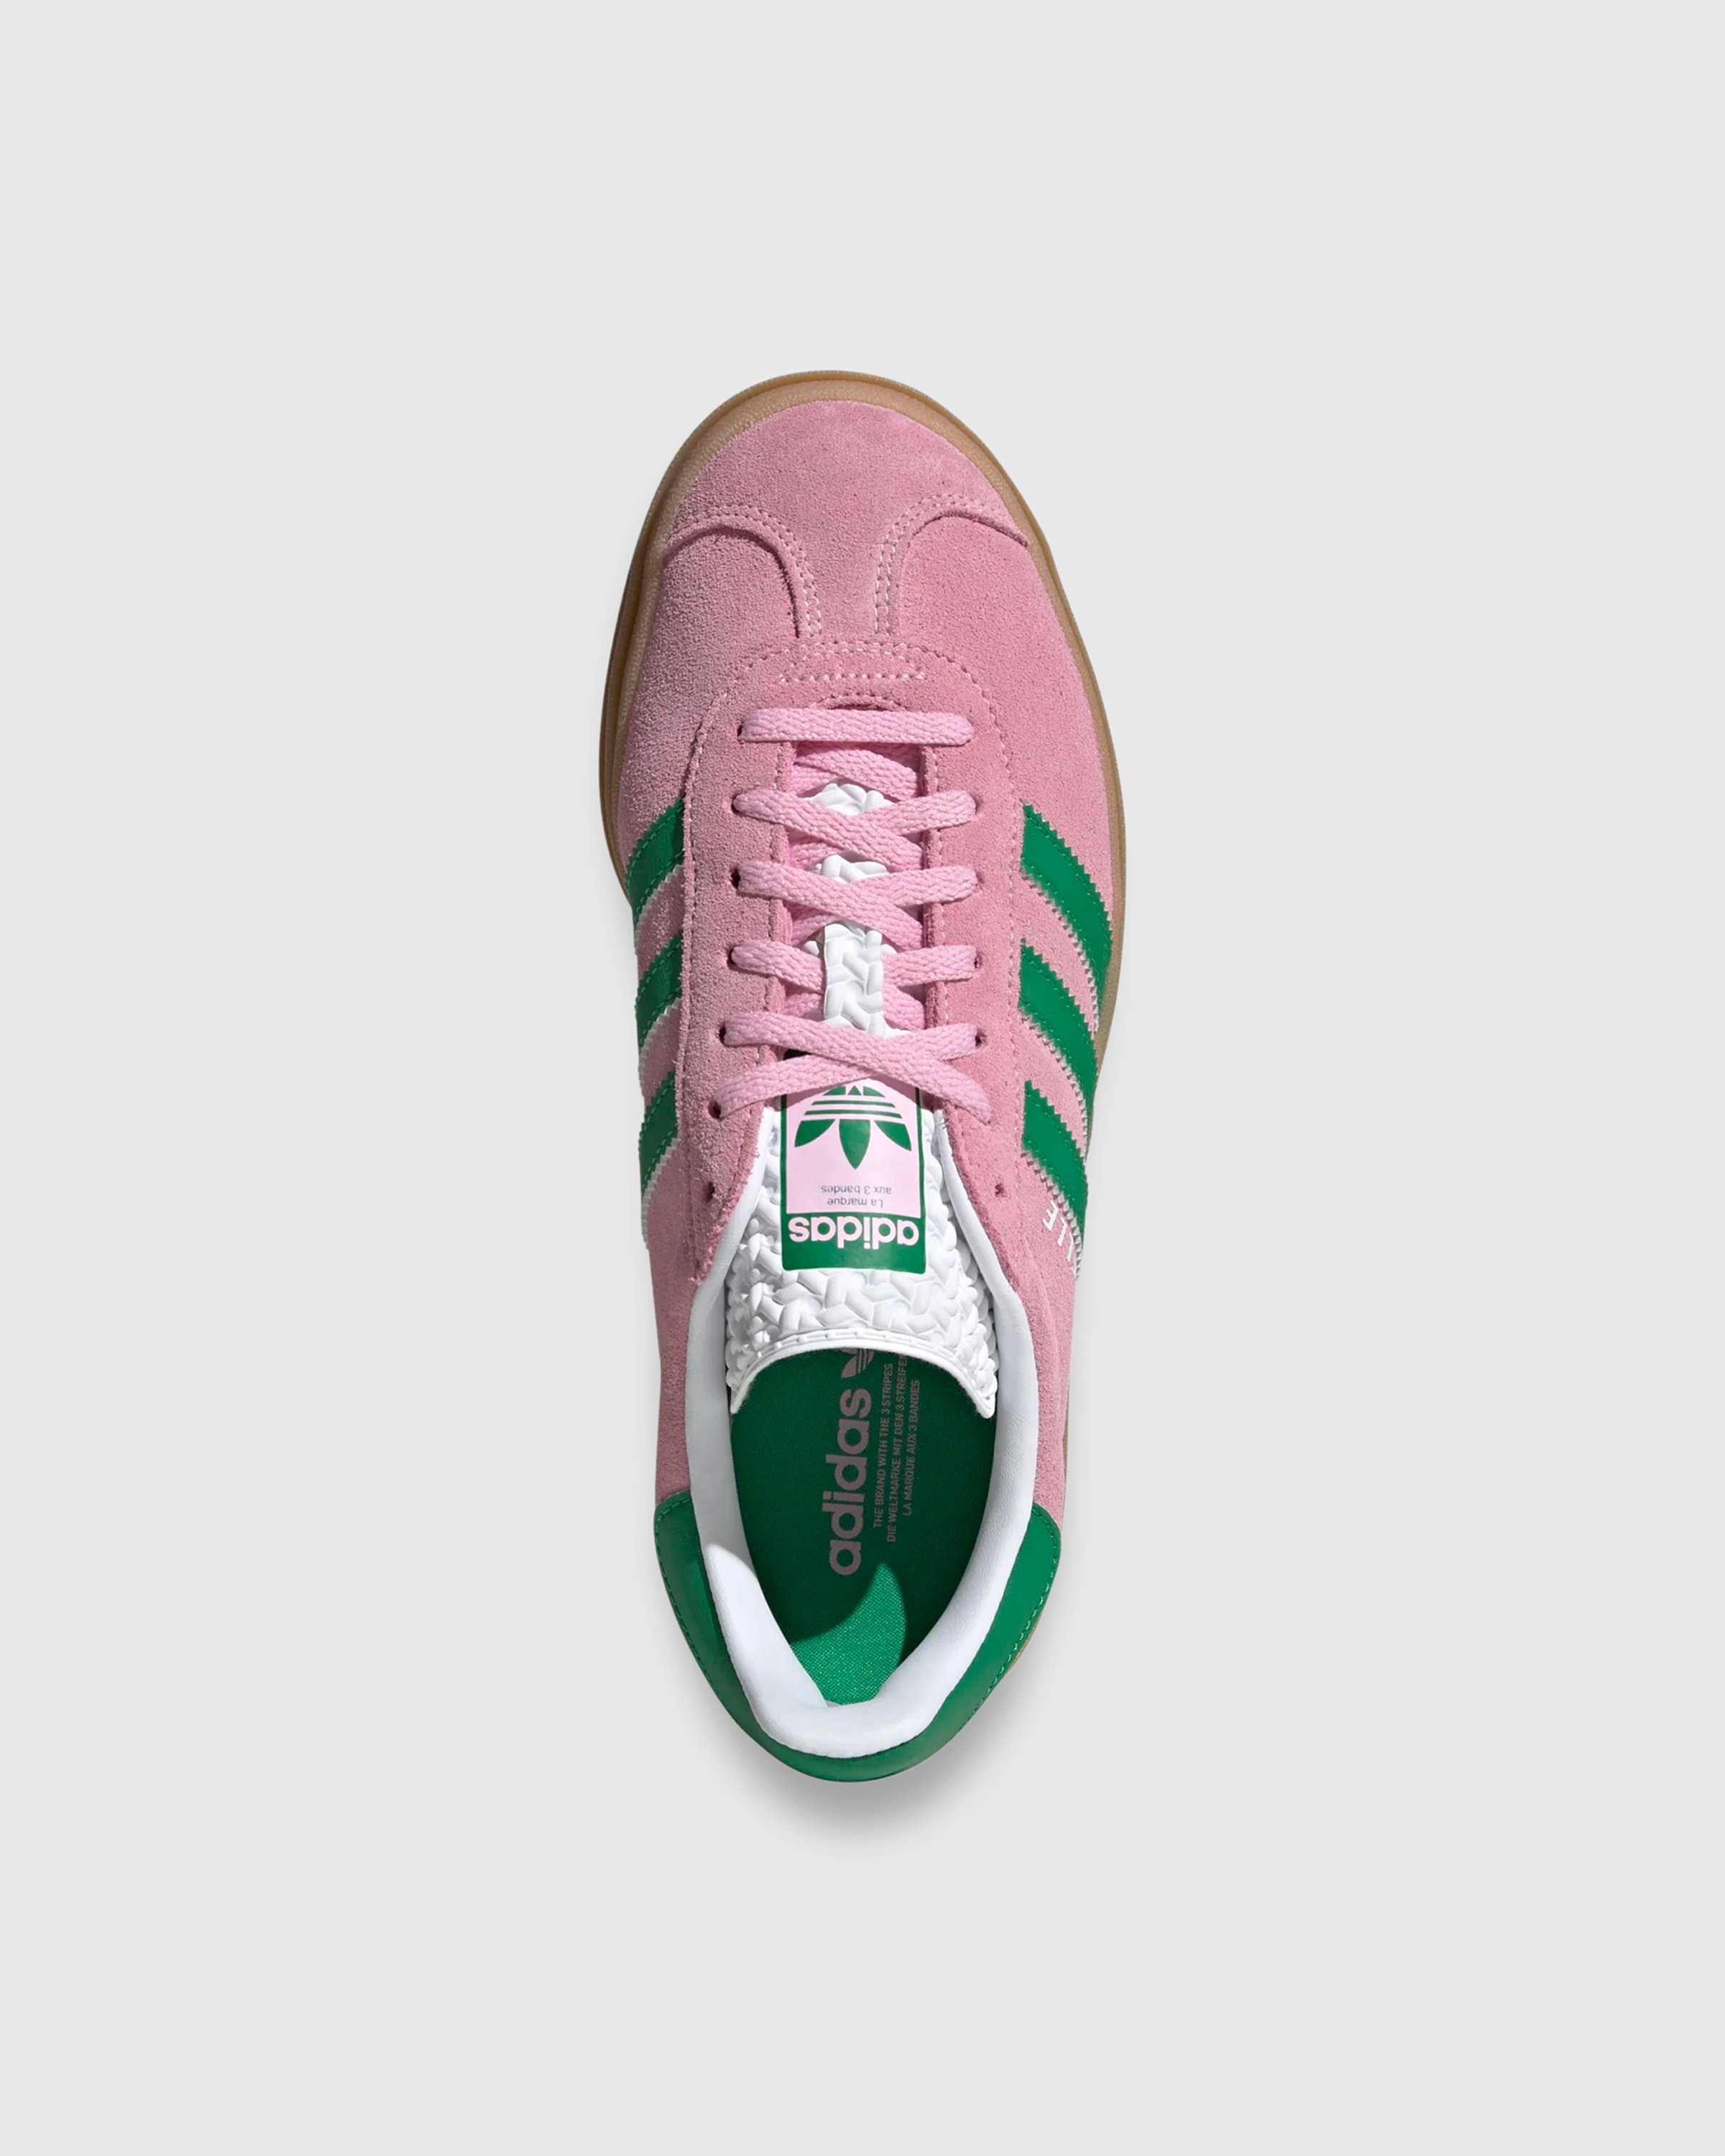 Adidas - GAZELLE BOLD W      TRUPNK/GREEN/FTWWHT - Footwear - Pink - Image 5